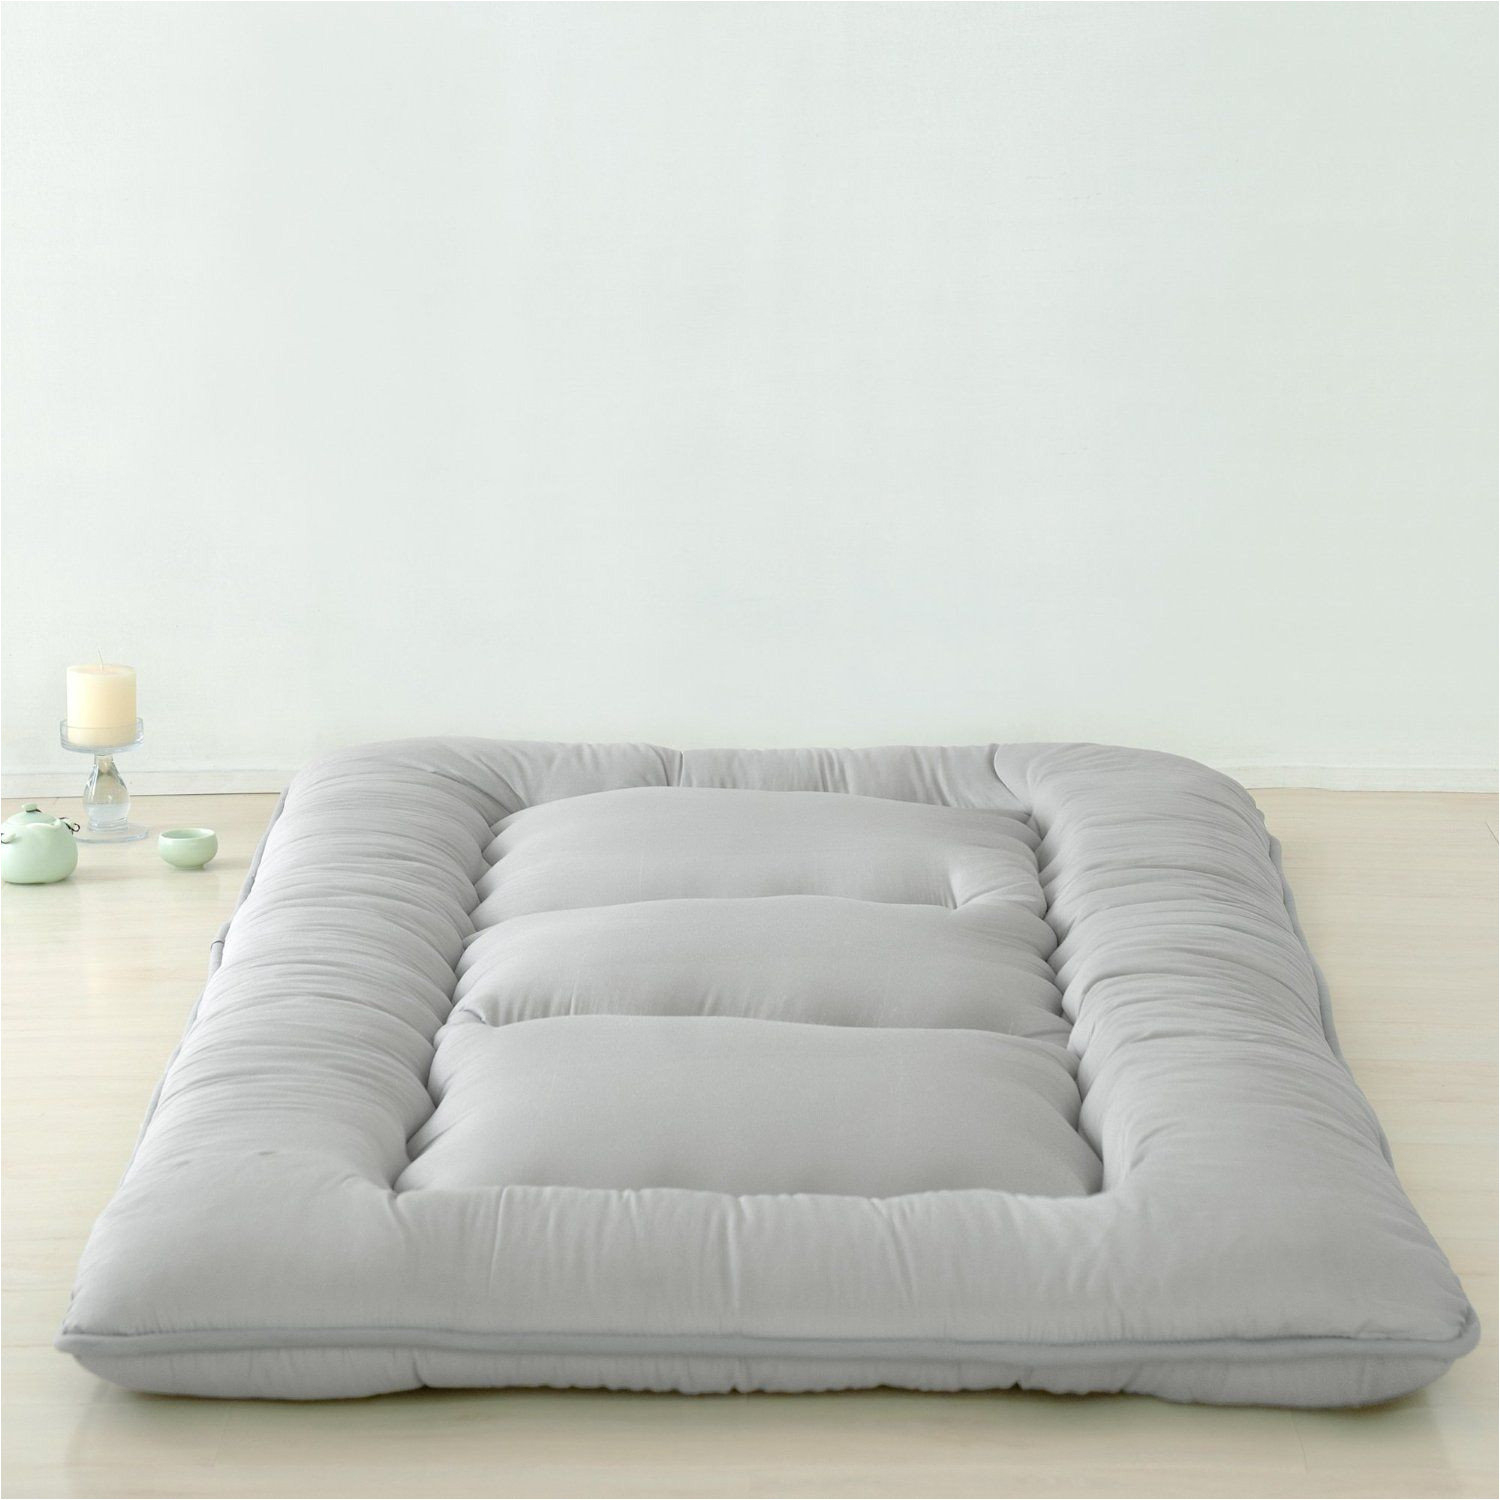 amazon com light grey futon tatami mat japanese futon mattress cheap futons for sale luxury bedding christmas gift idea twin size kitchen dining